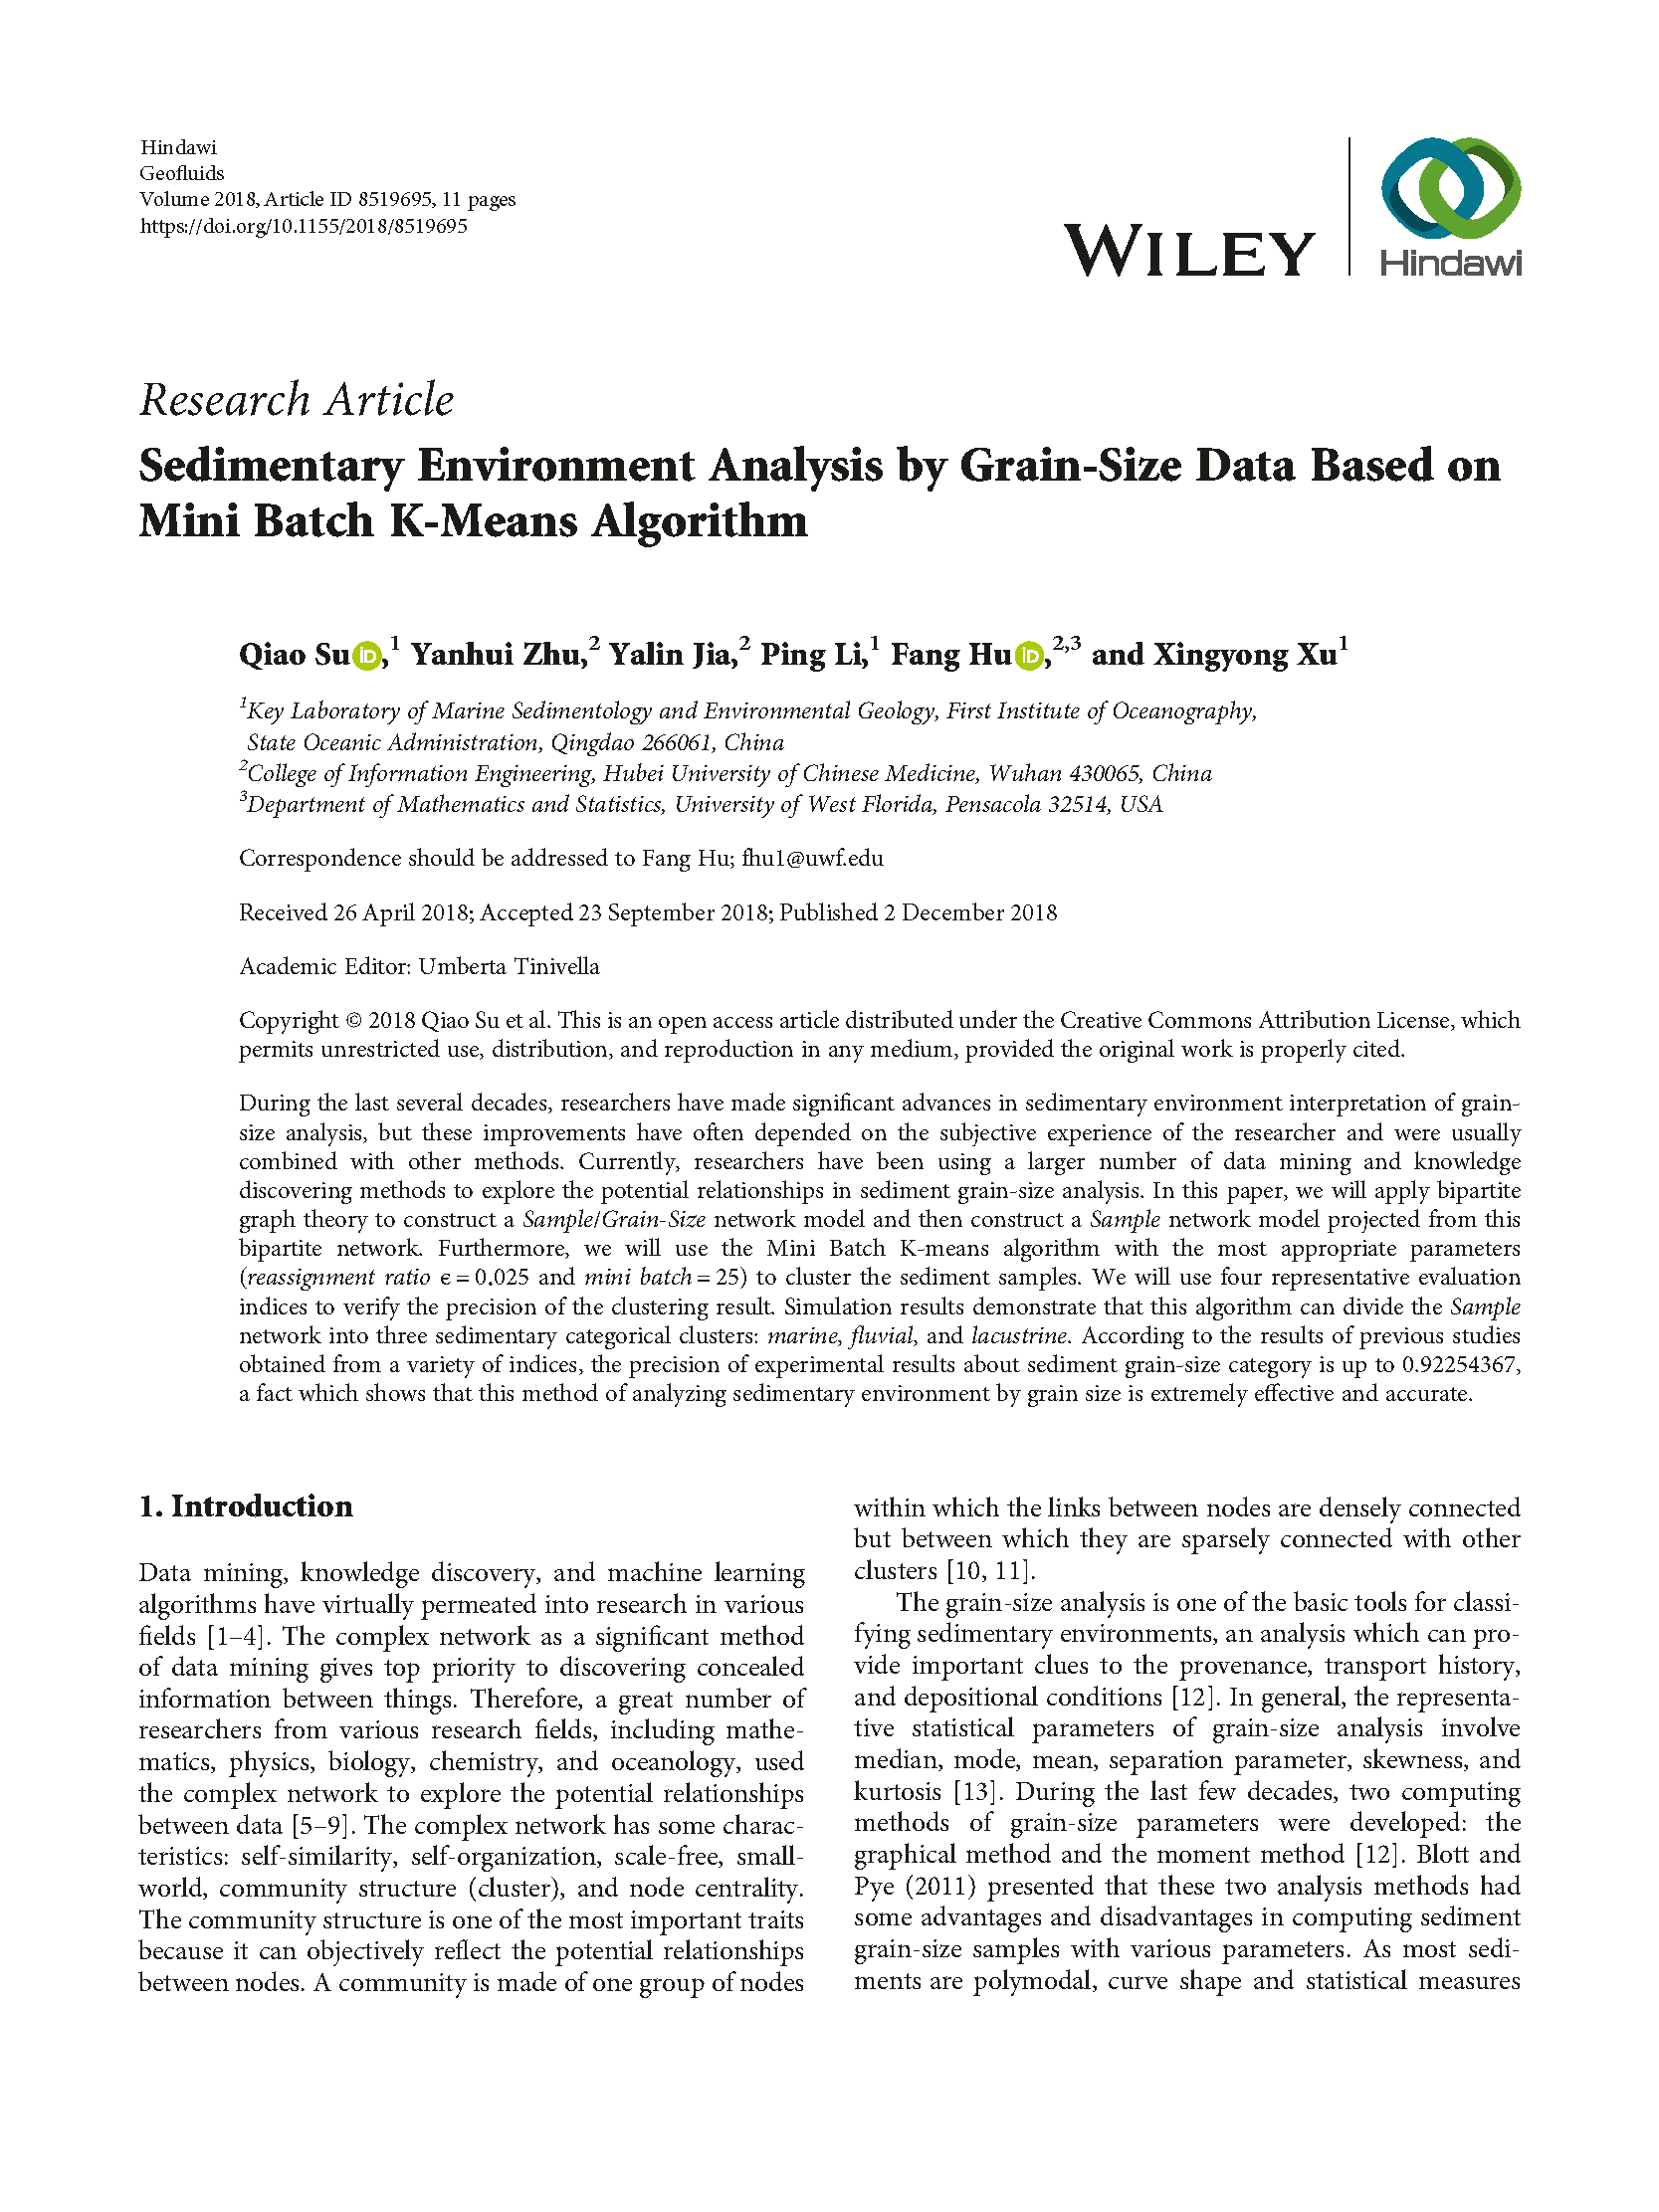 Sedimentary Environment Analysis by Grain-Size Data Based on Mini Batch K-Means Algorithm (SCI)